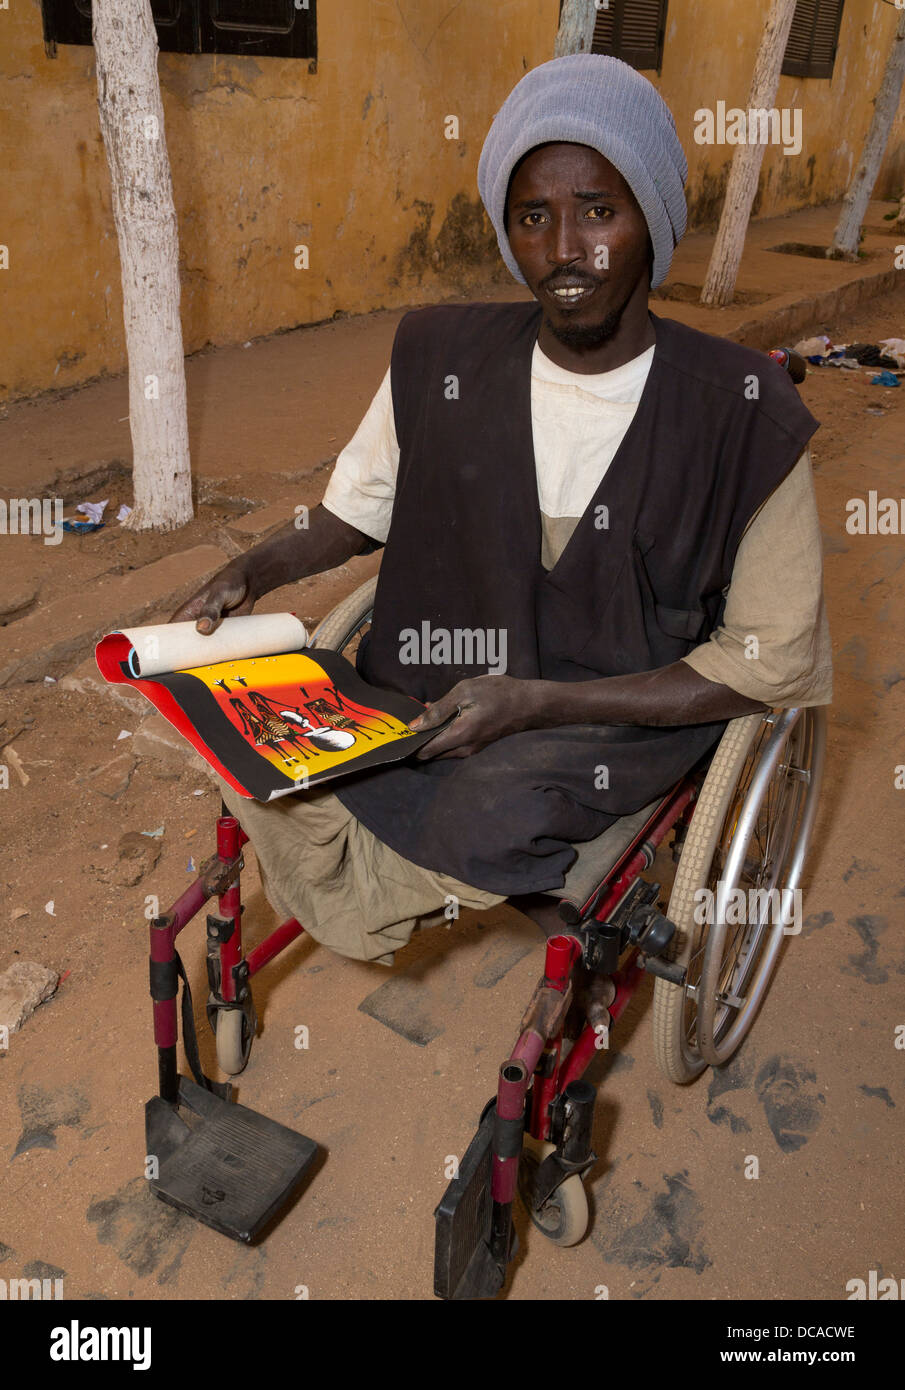 Handicapped Artist in Wheel Chair, Goree Island, Senegal. Stock Photo